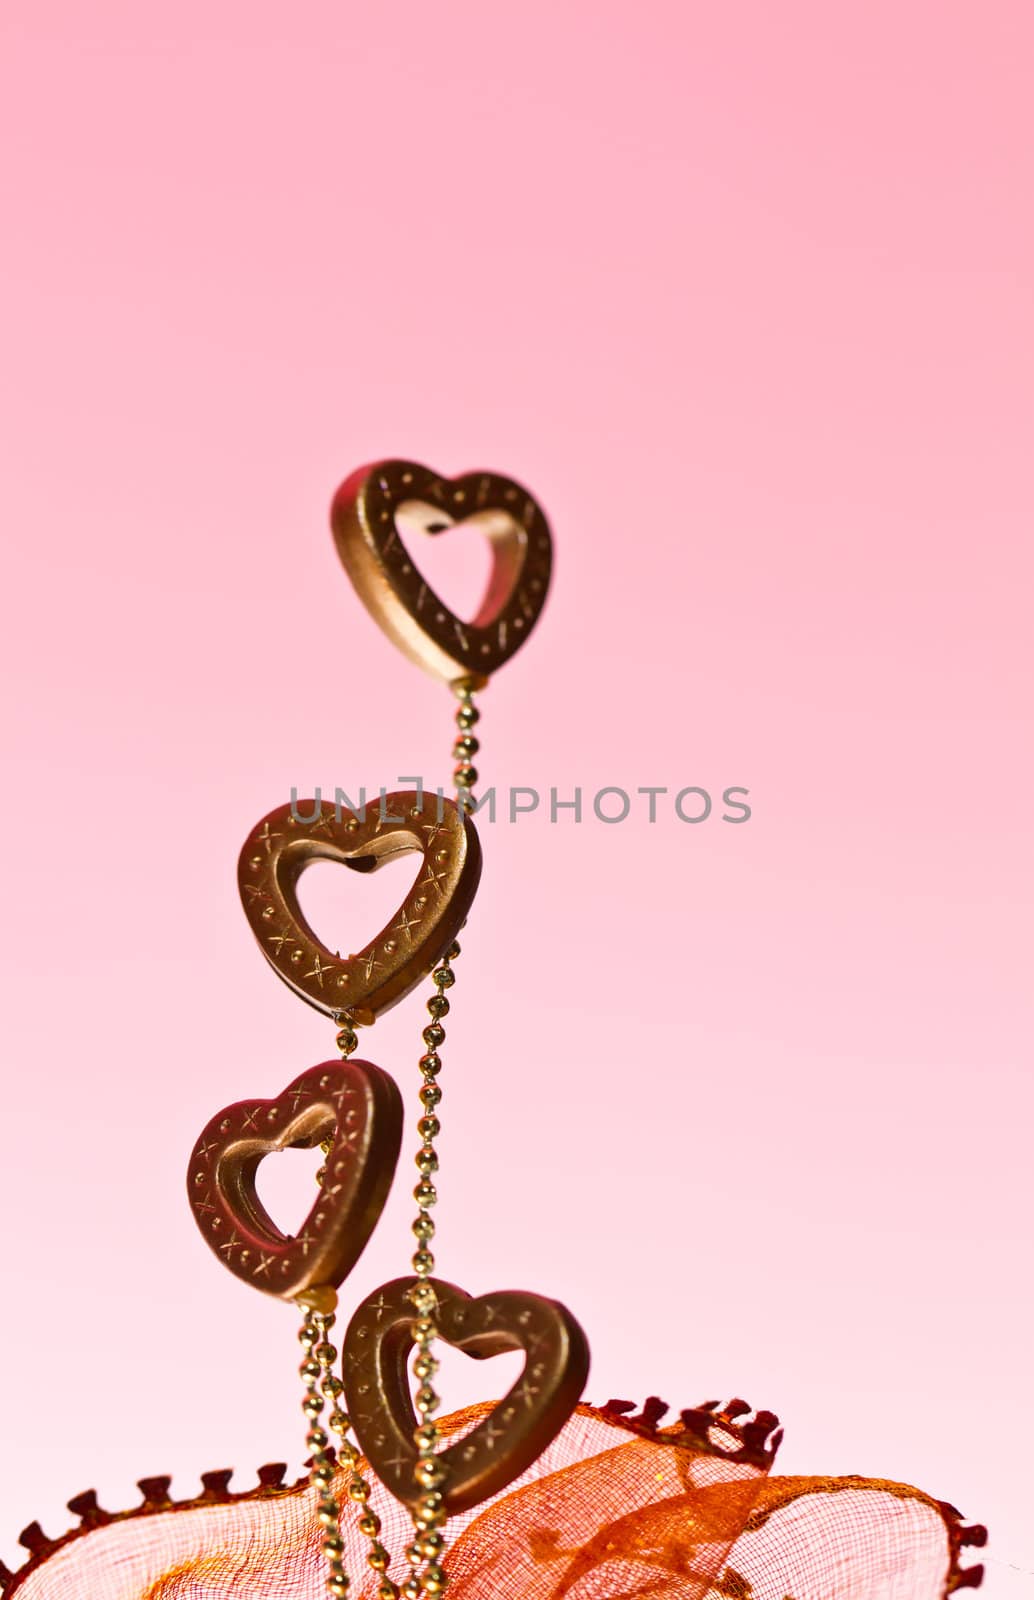 four plastic valentine hearts at left frame on pink background in portrait orientation